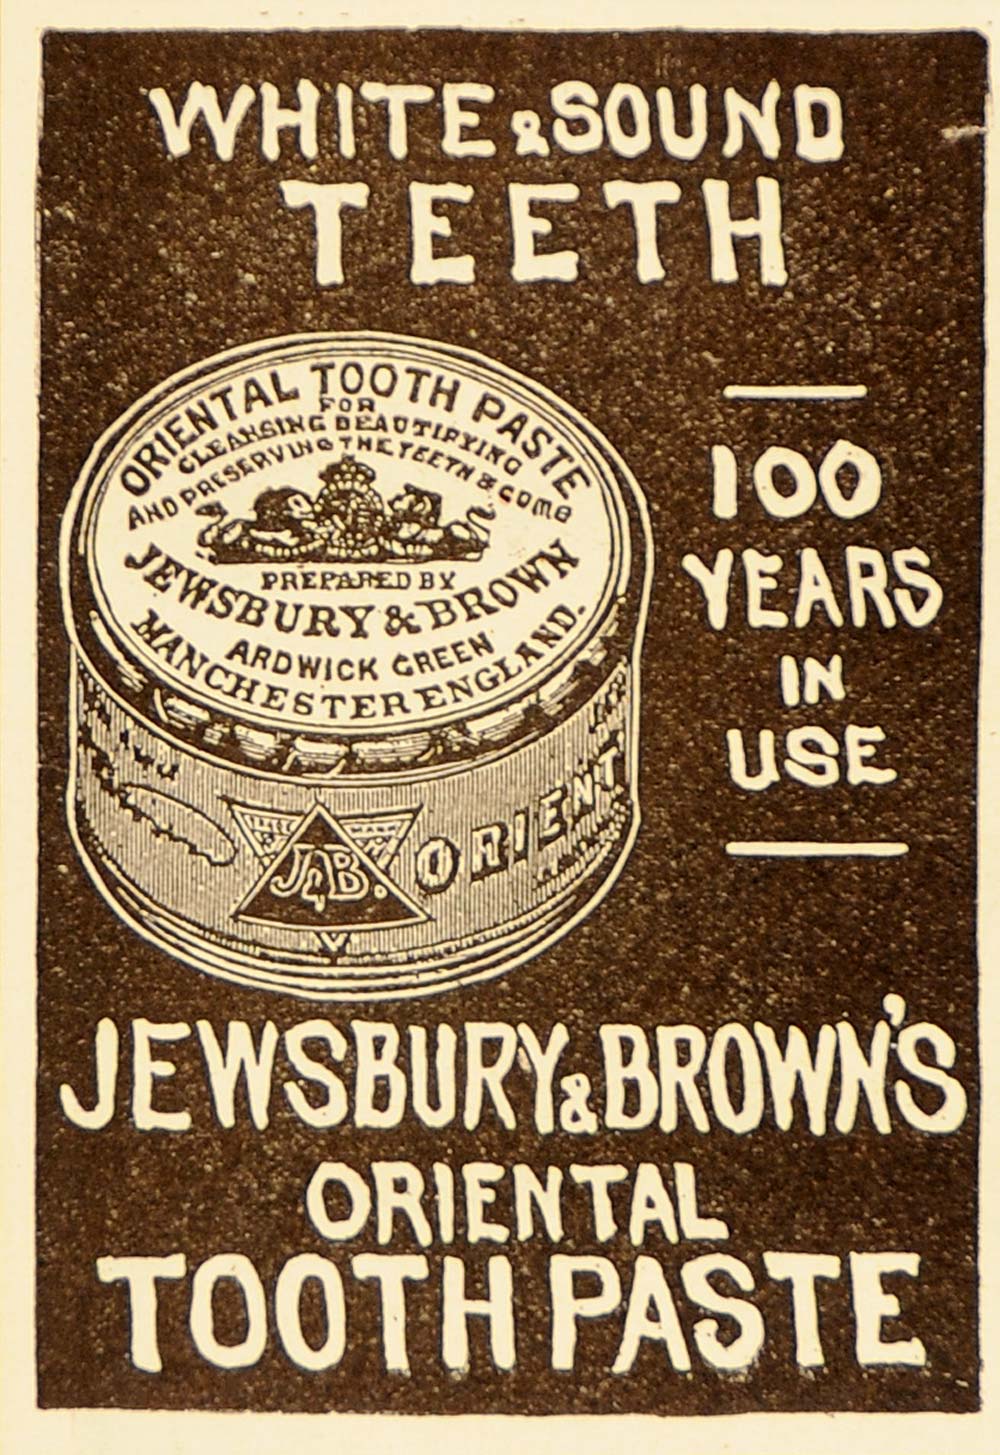 1905 Vintage Ad Jewsbury & Brown Oriental Toothpaste - ORIGINAL ADVERTISING OLD6